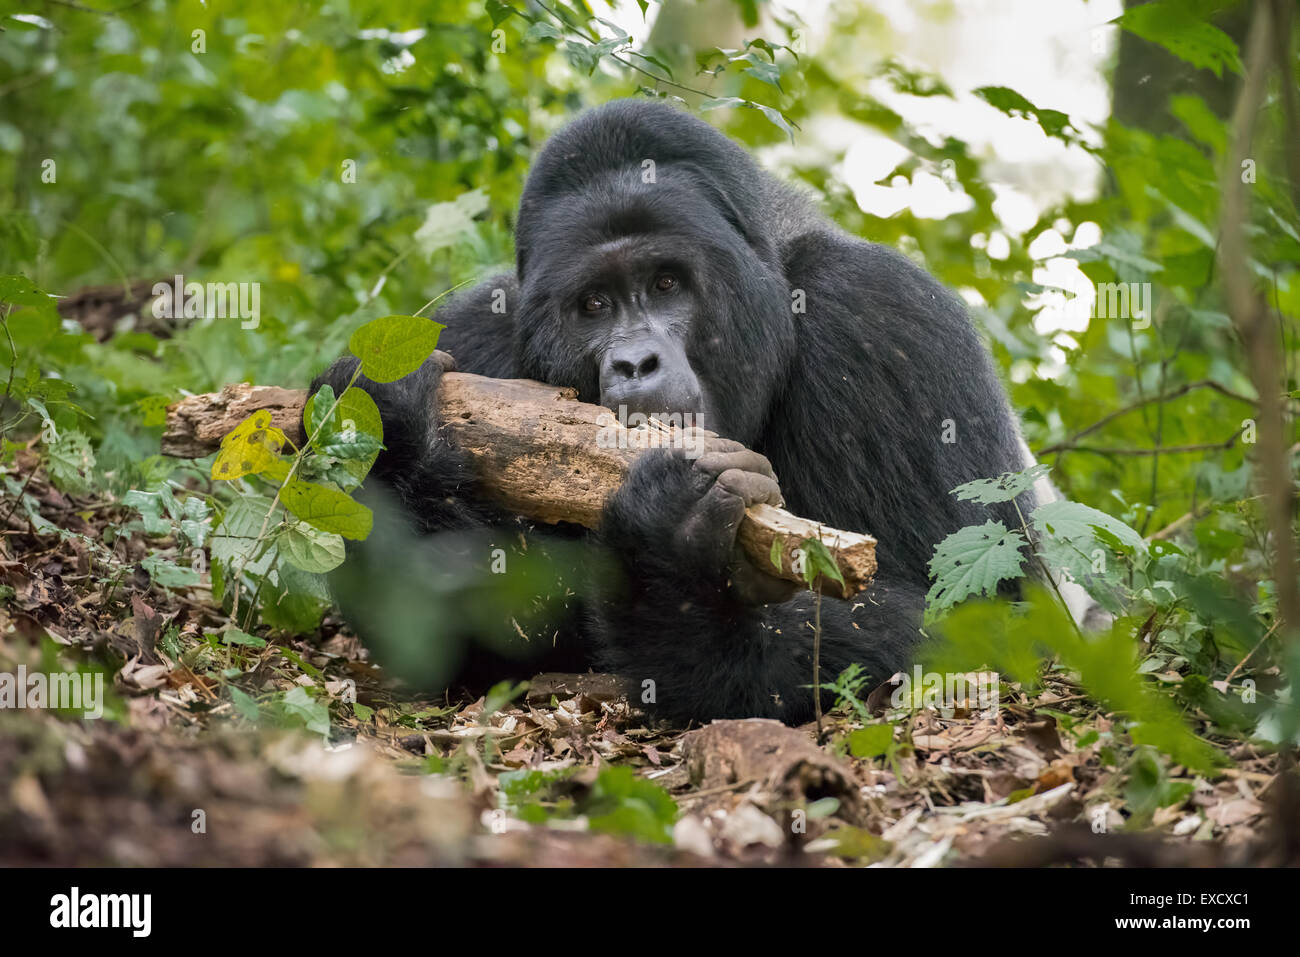 Gorilla eating termites from log, Bwindi, Uganda Stock Photo